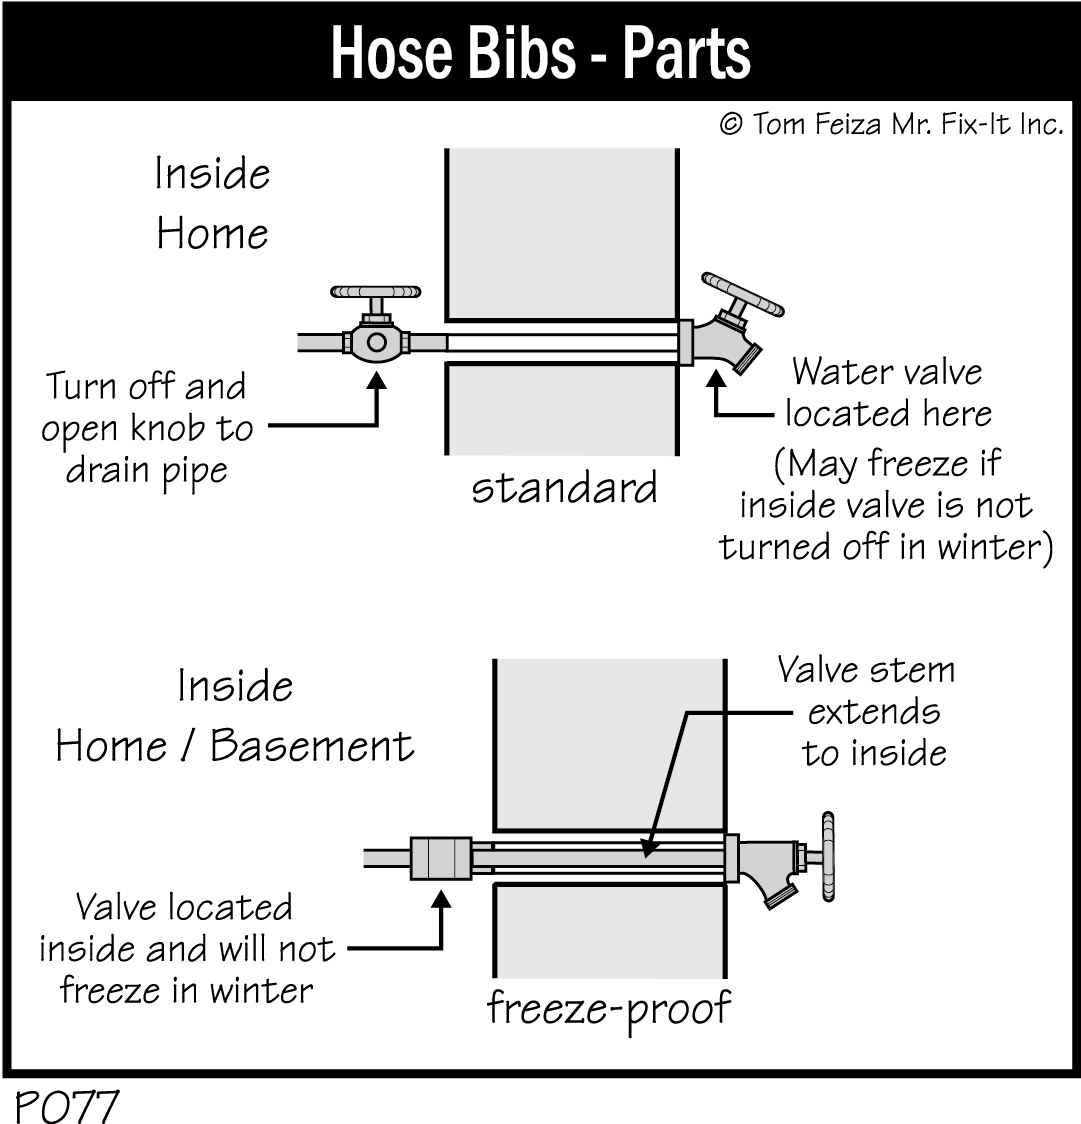 P077 - Hose Bibs - Parts